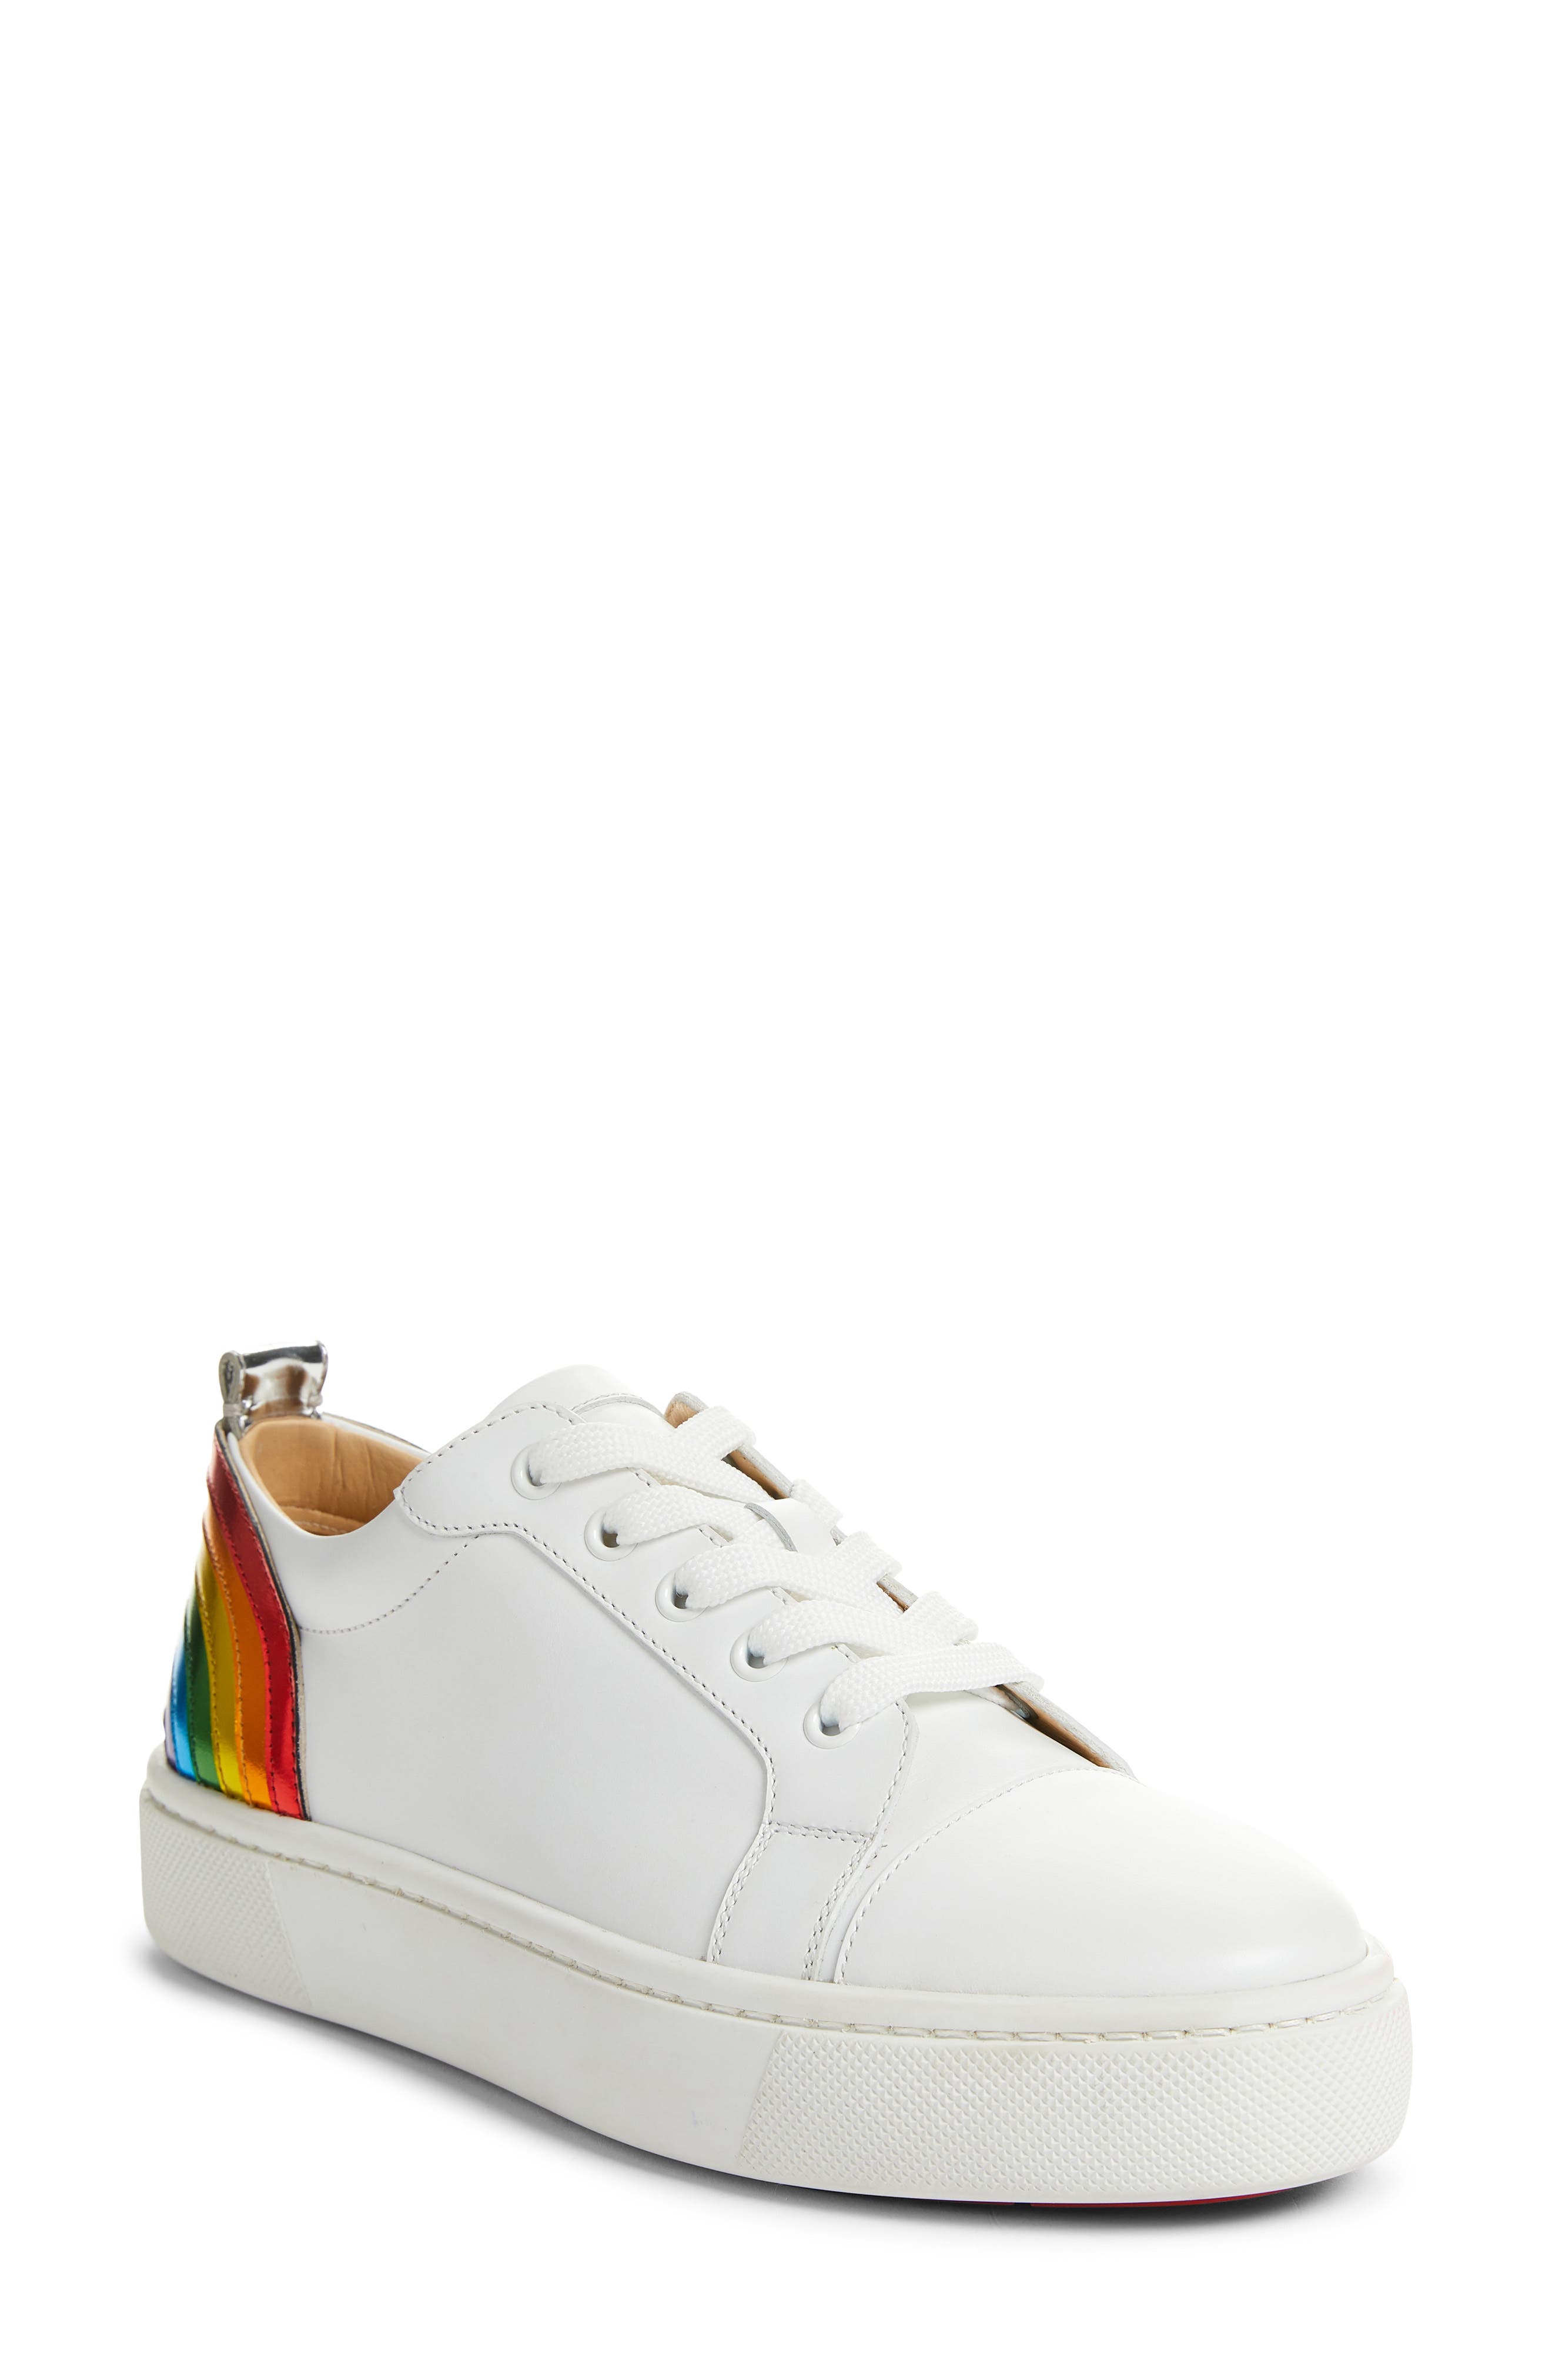 rainbow louboutin sneakers